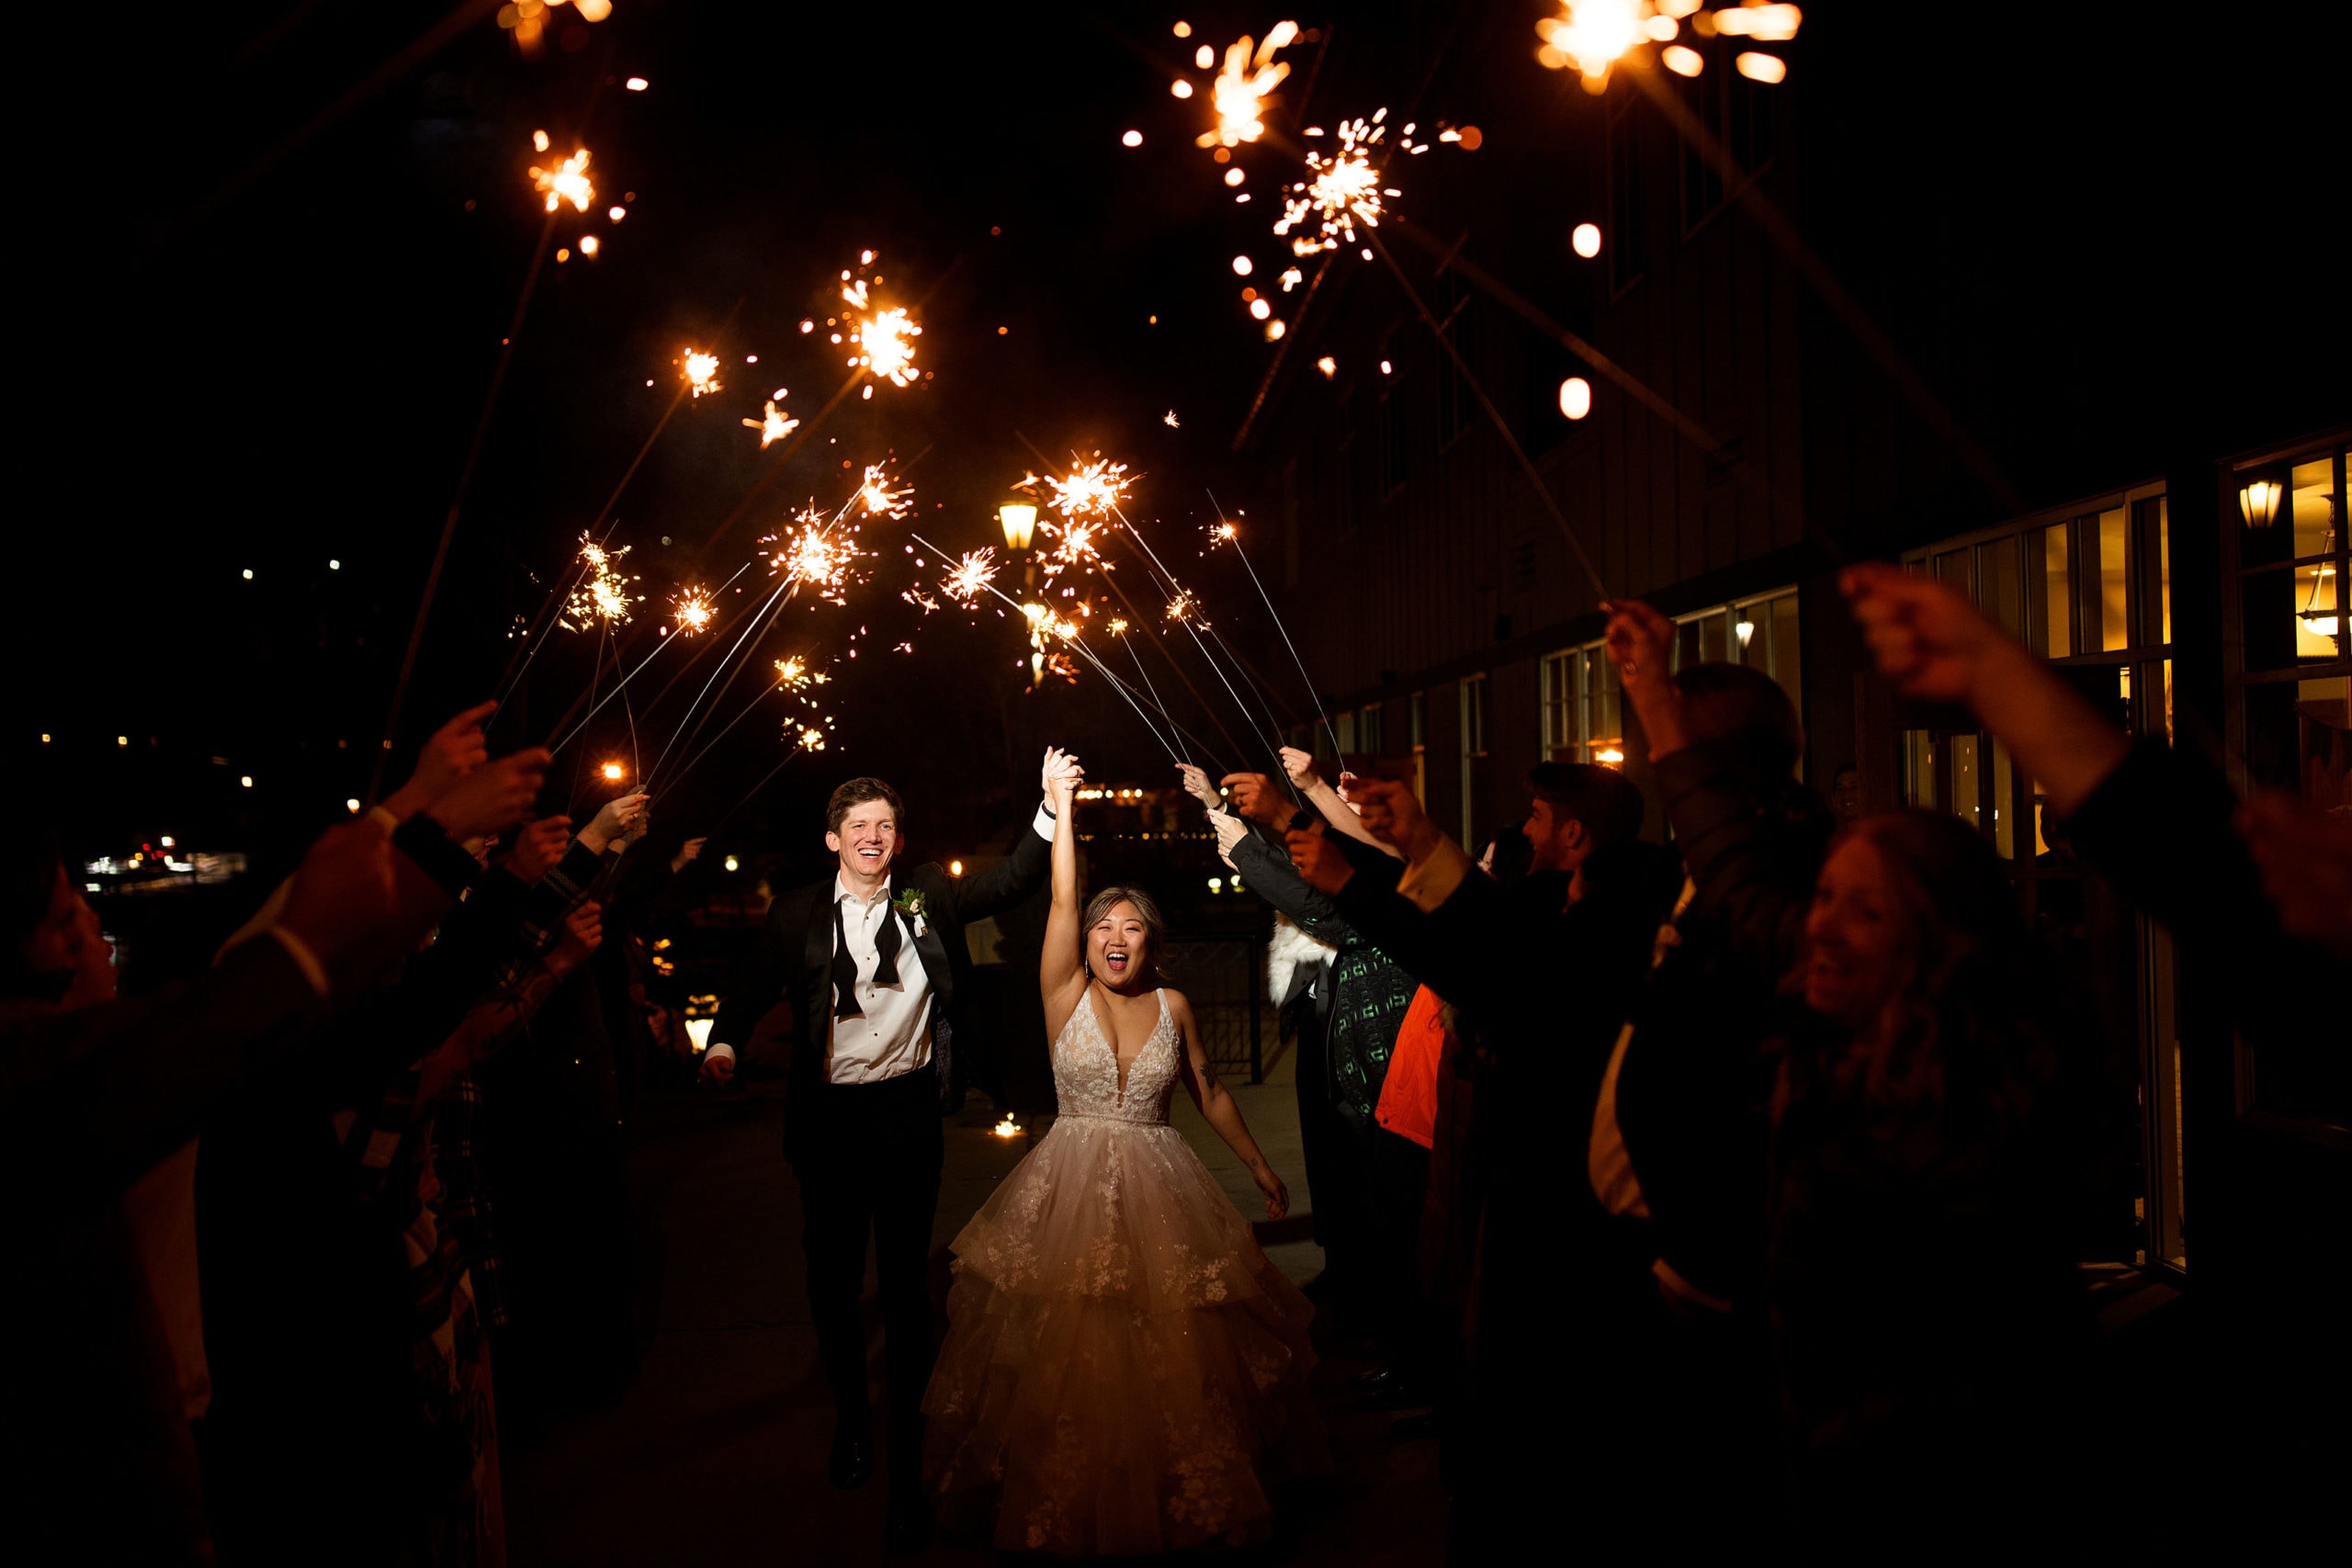 The newlyweds run through a sparkler exit at Main Street Station during their winter Breckenridge wedding